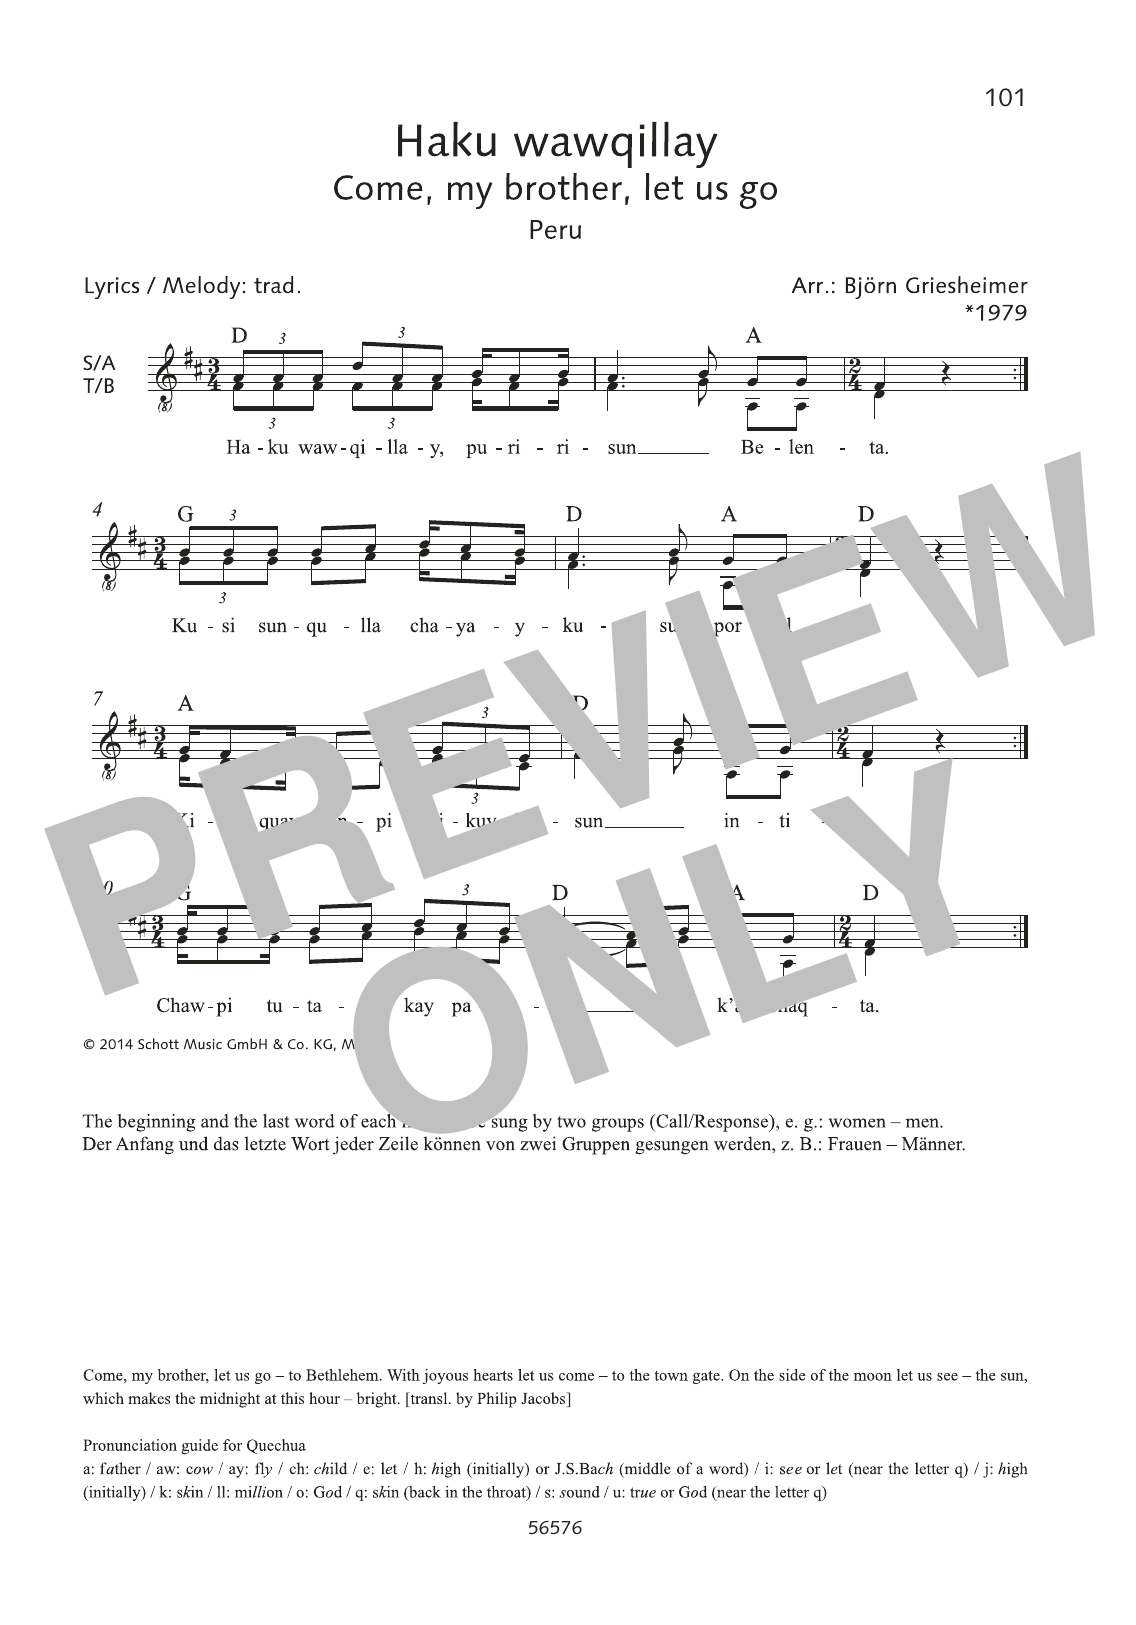 Björn Griesheimer Haku wawqillay Sheet Music Notes & Chords for Choral - Download or Print PDF